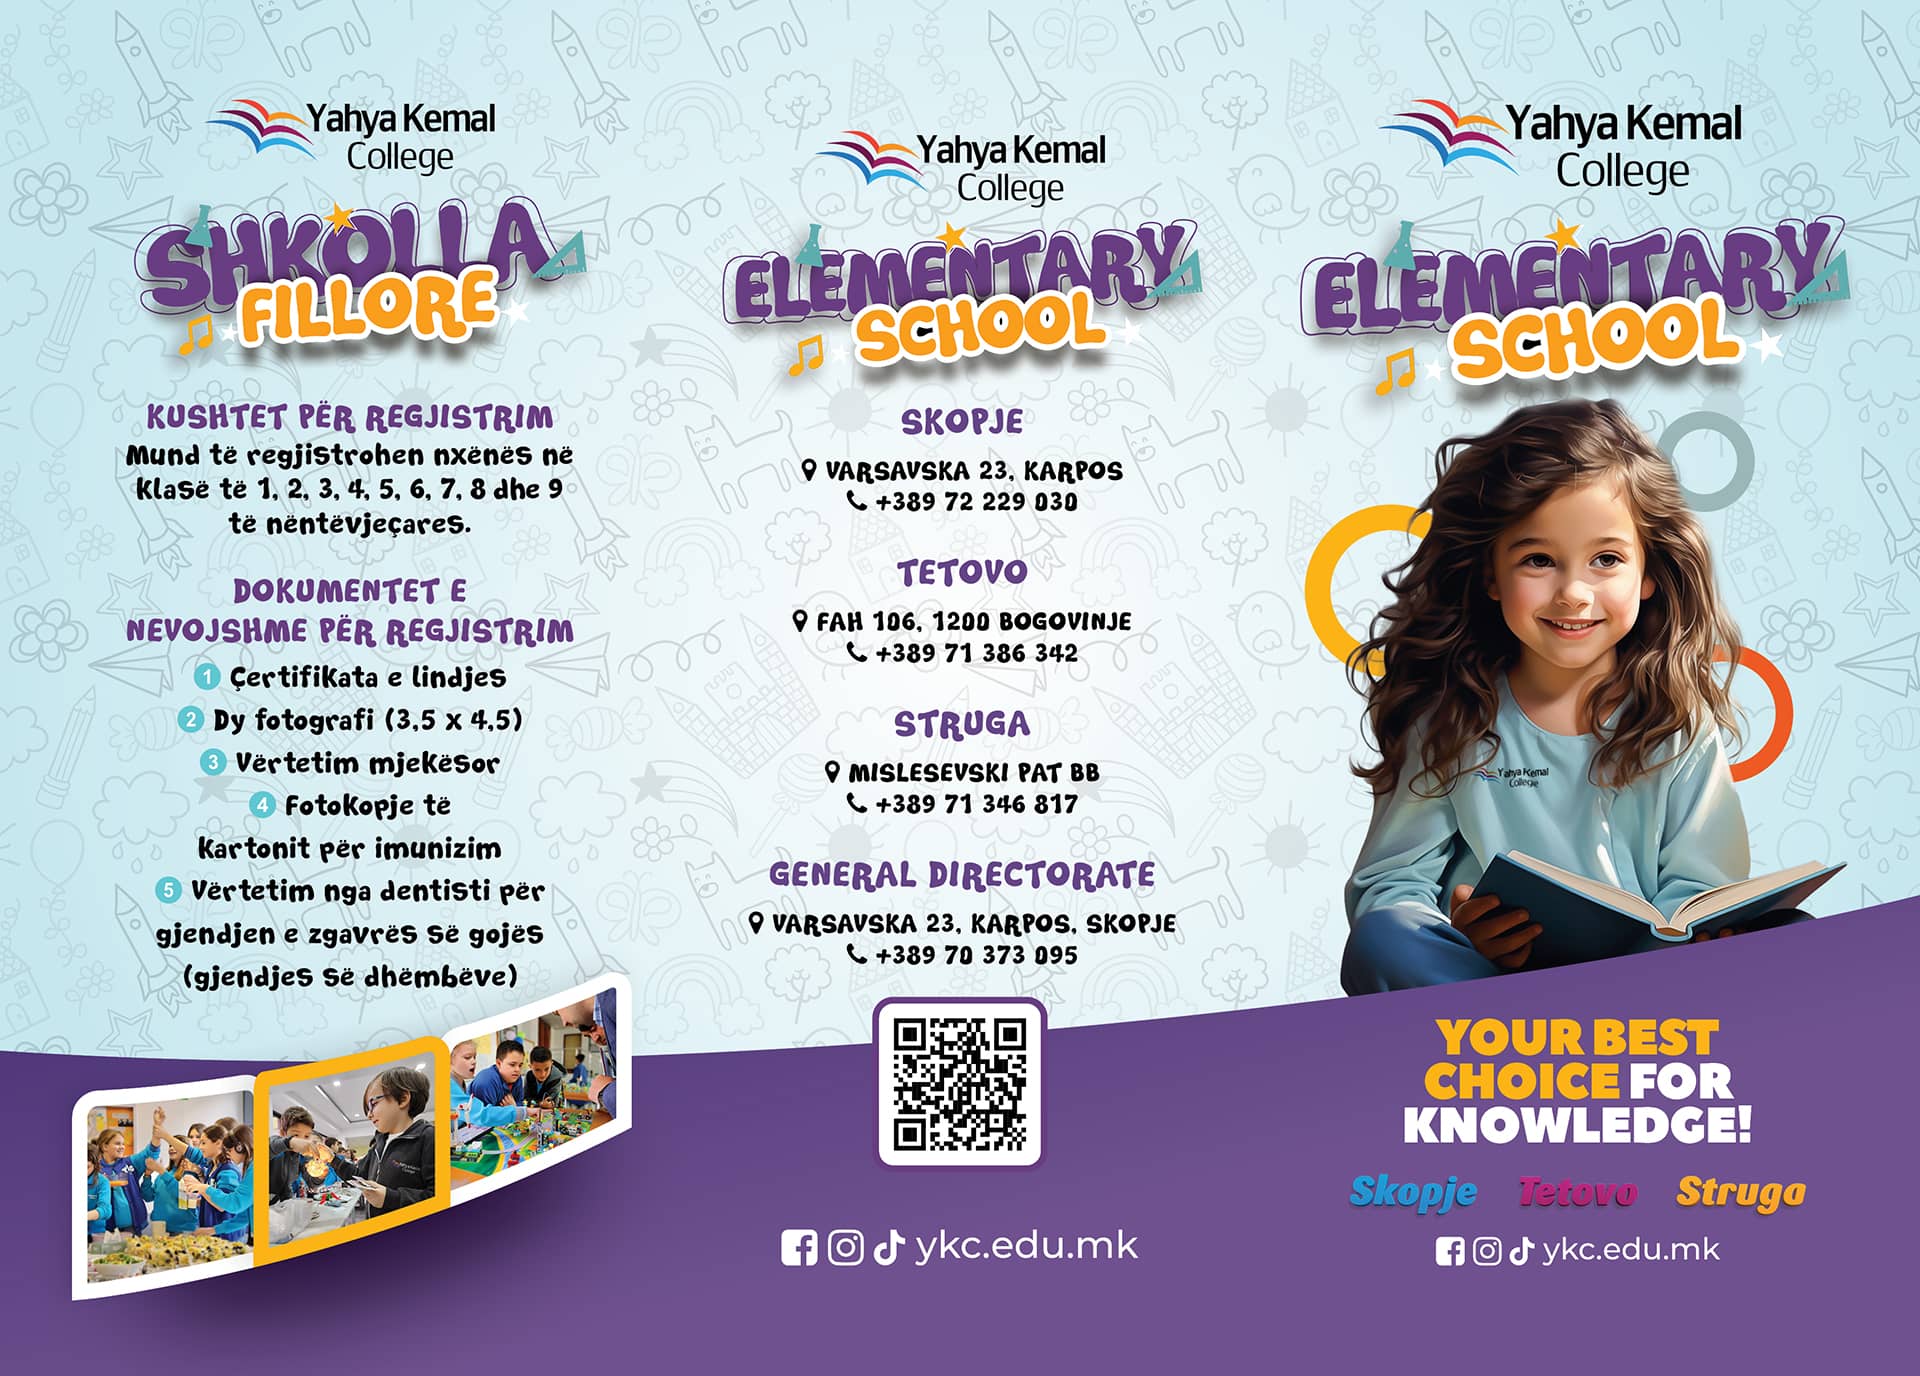 Yahya Kemal Elementary School